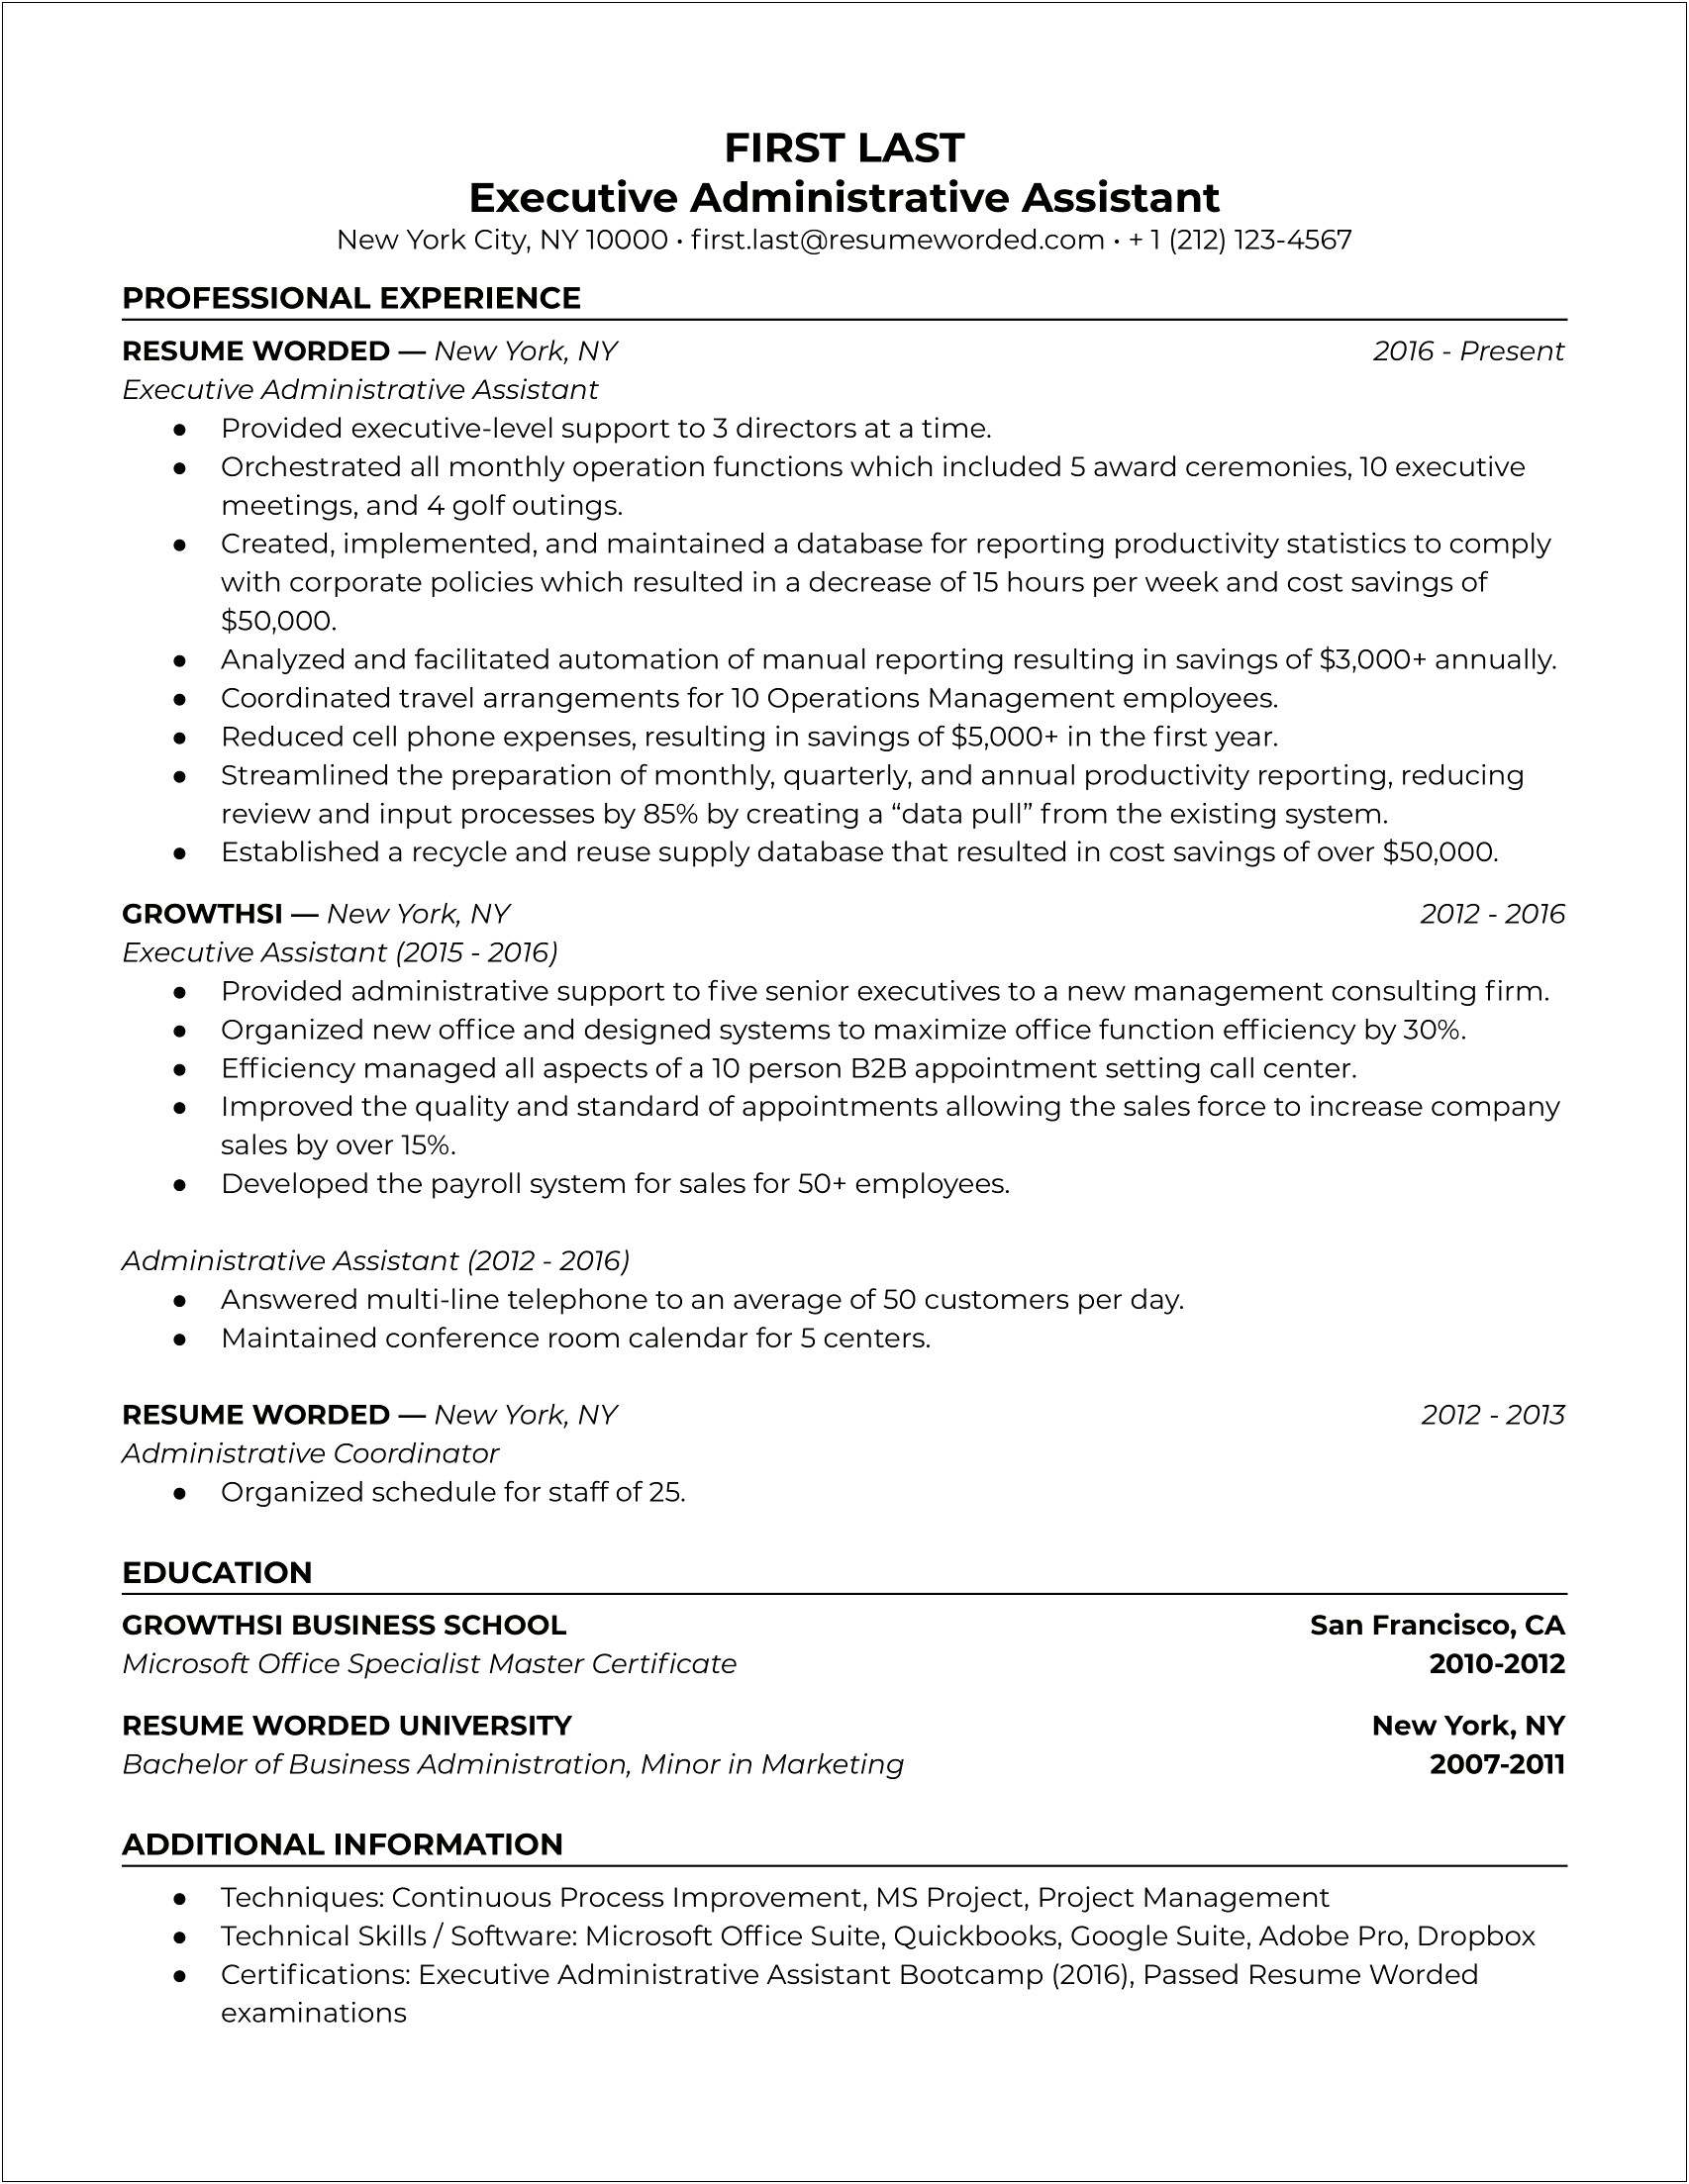 Sample Resume For Education Administrator Position